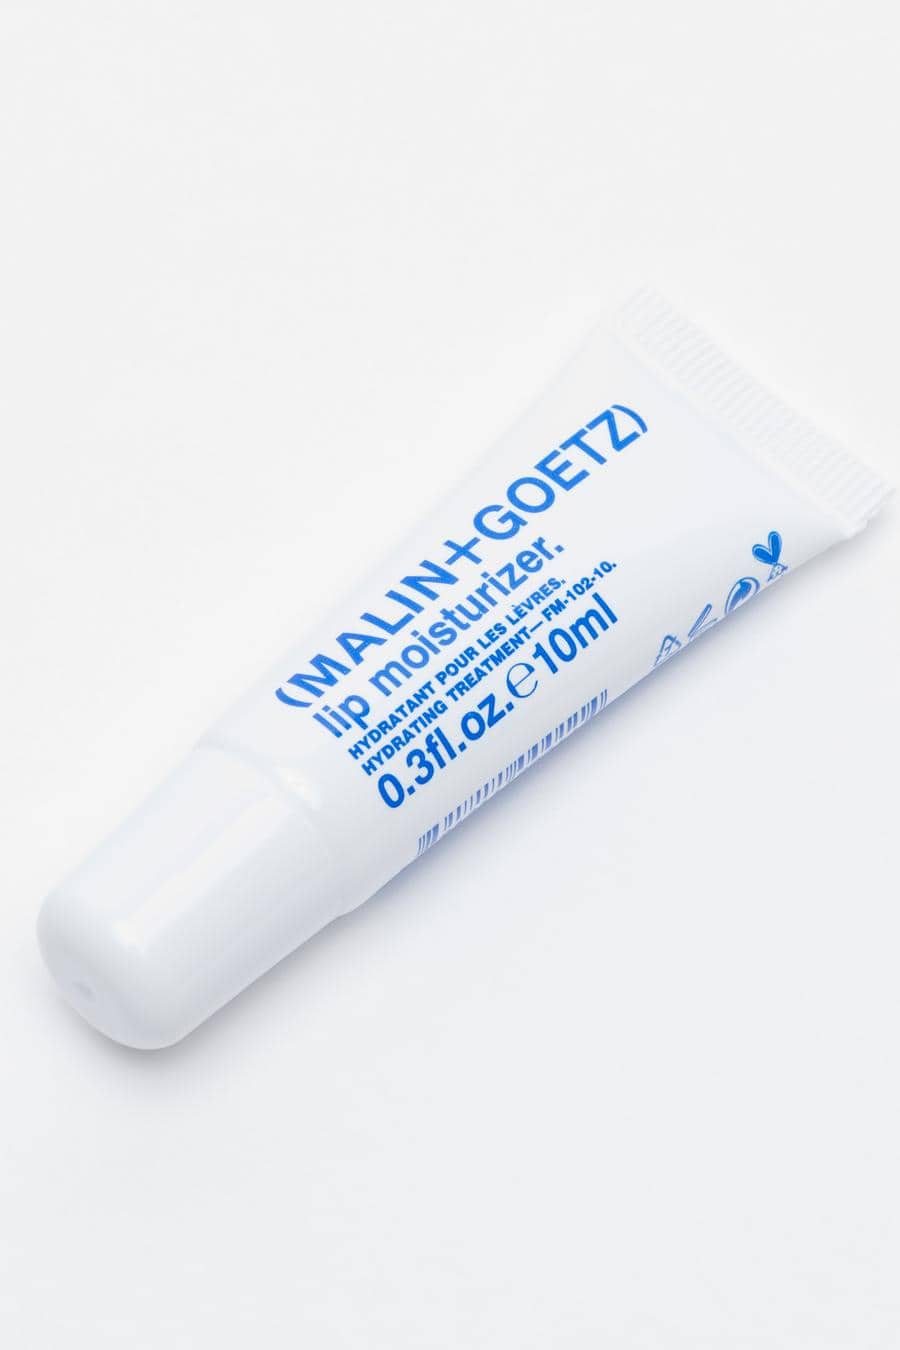 A white tube of lip balm with blue text, reading “Malin + Goetz lip moisturiser”.